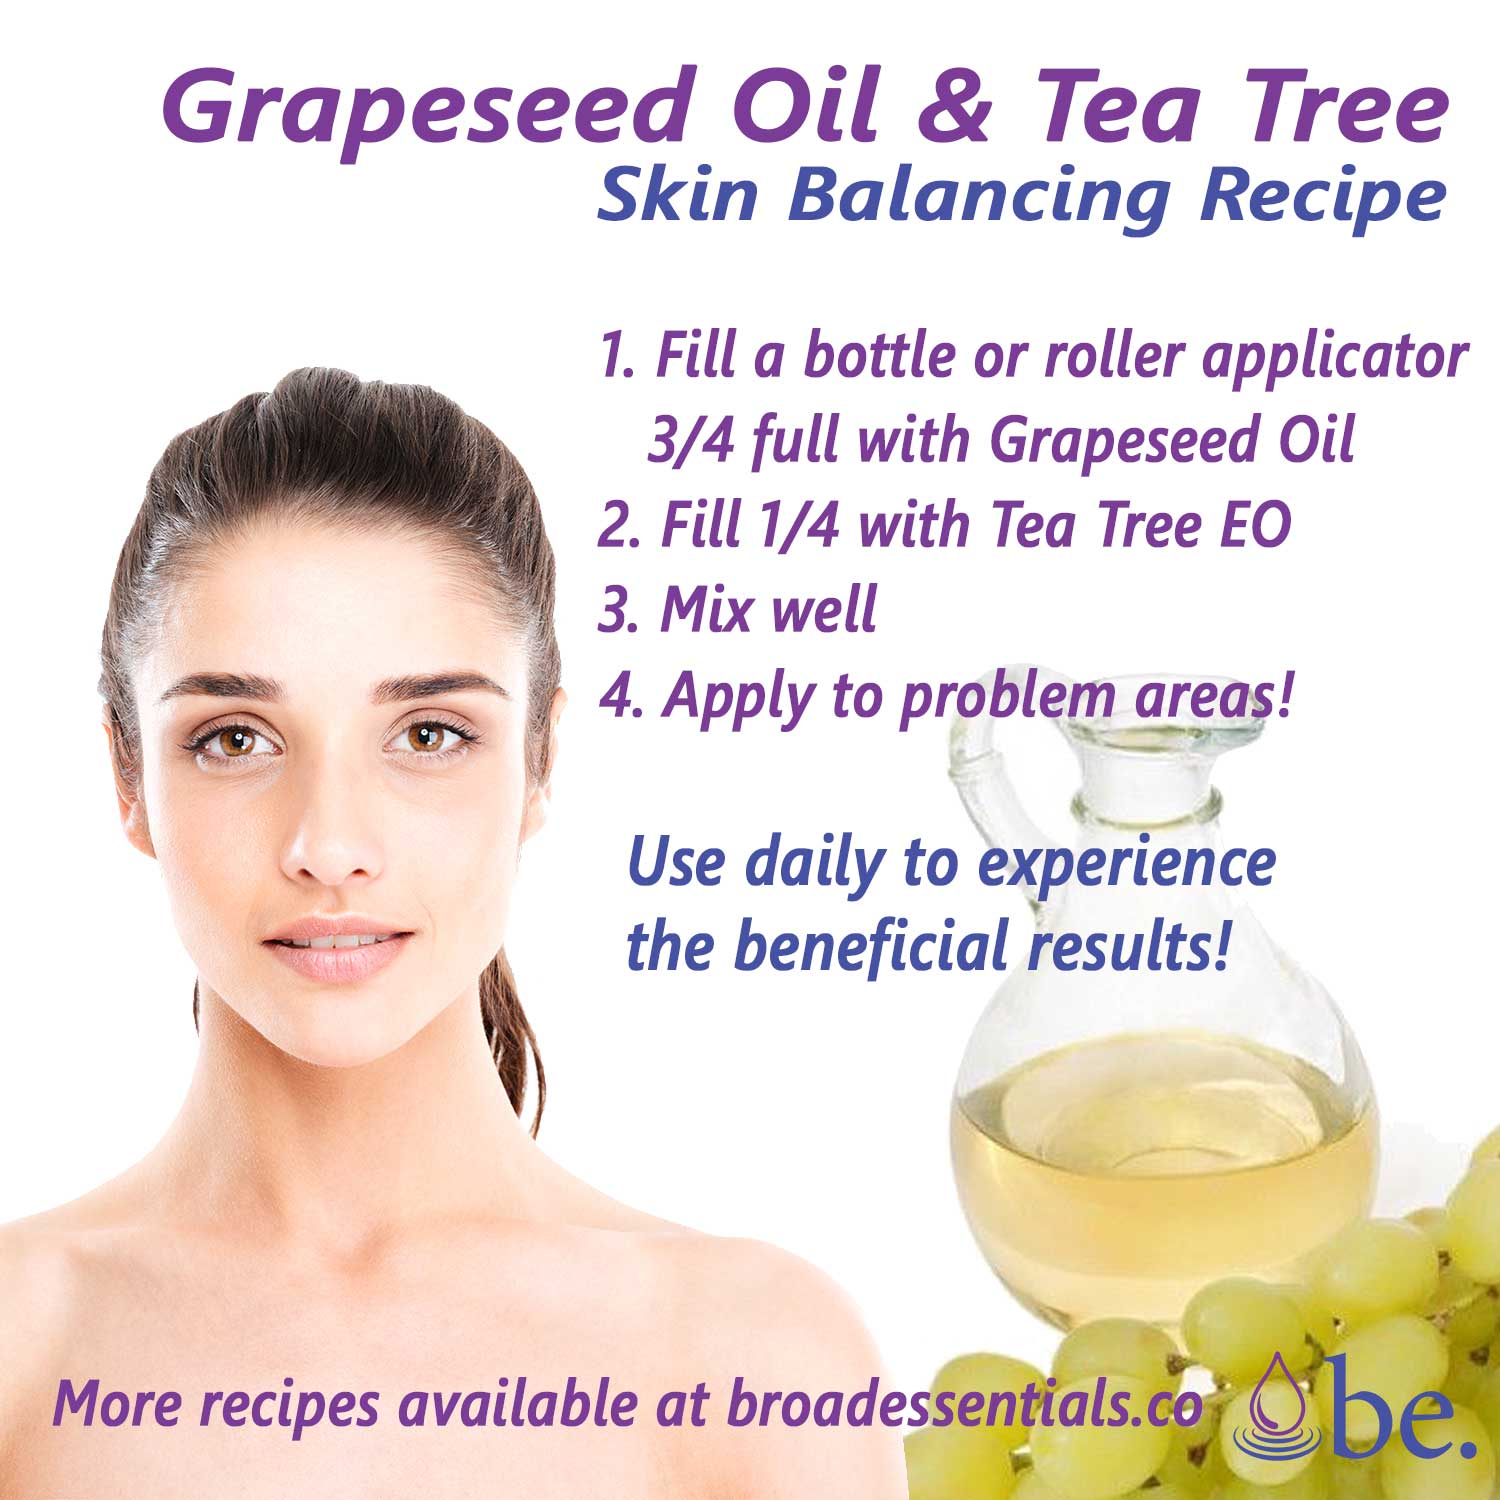 Grapeseed Oil & Tea Tree Skin Balancing Recipe